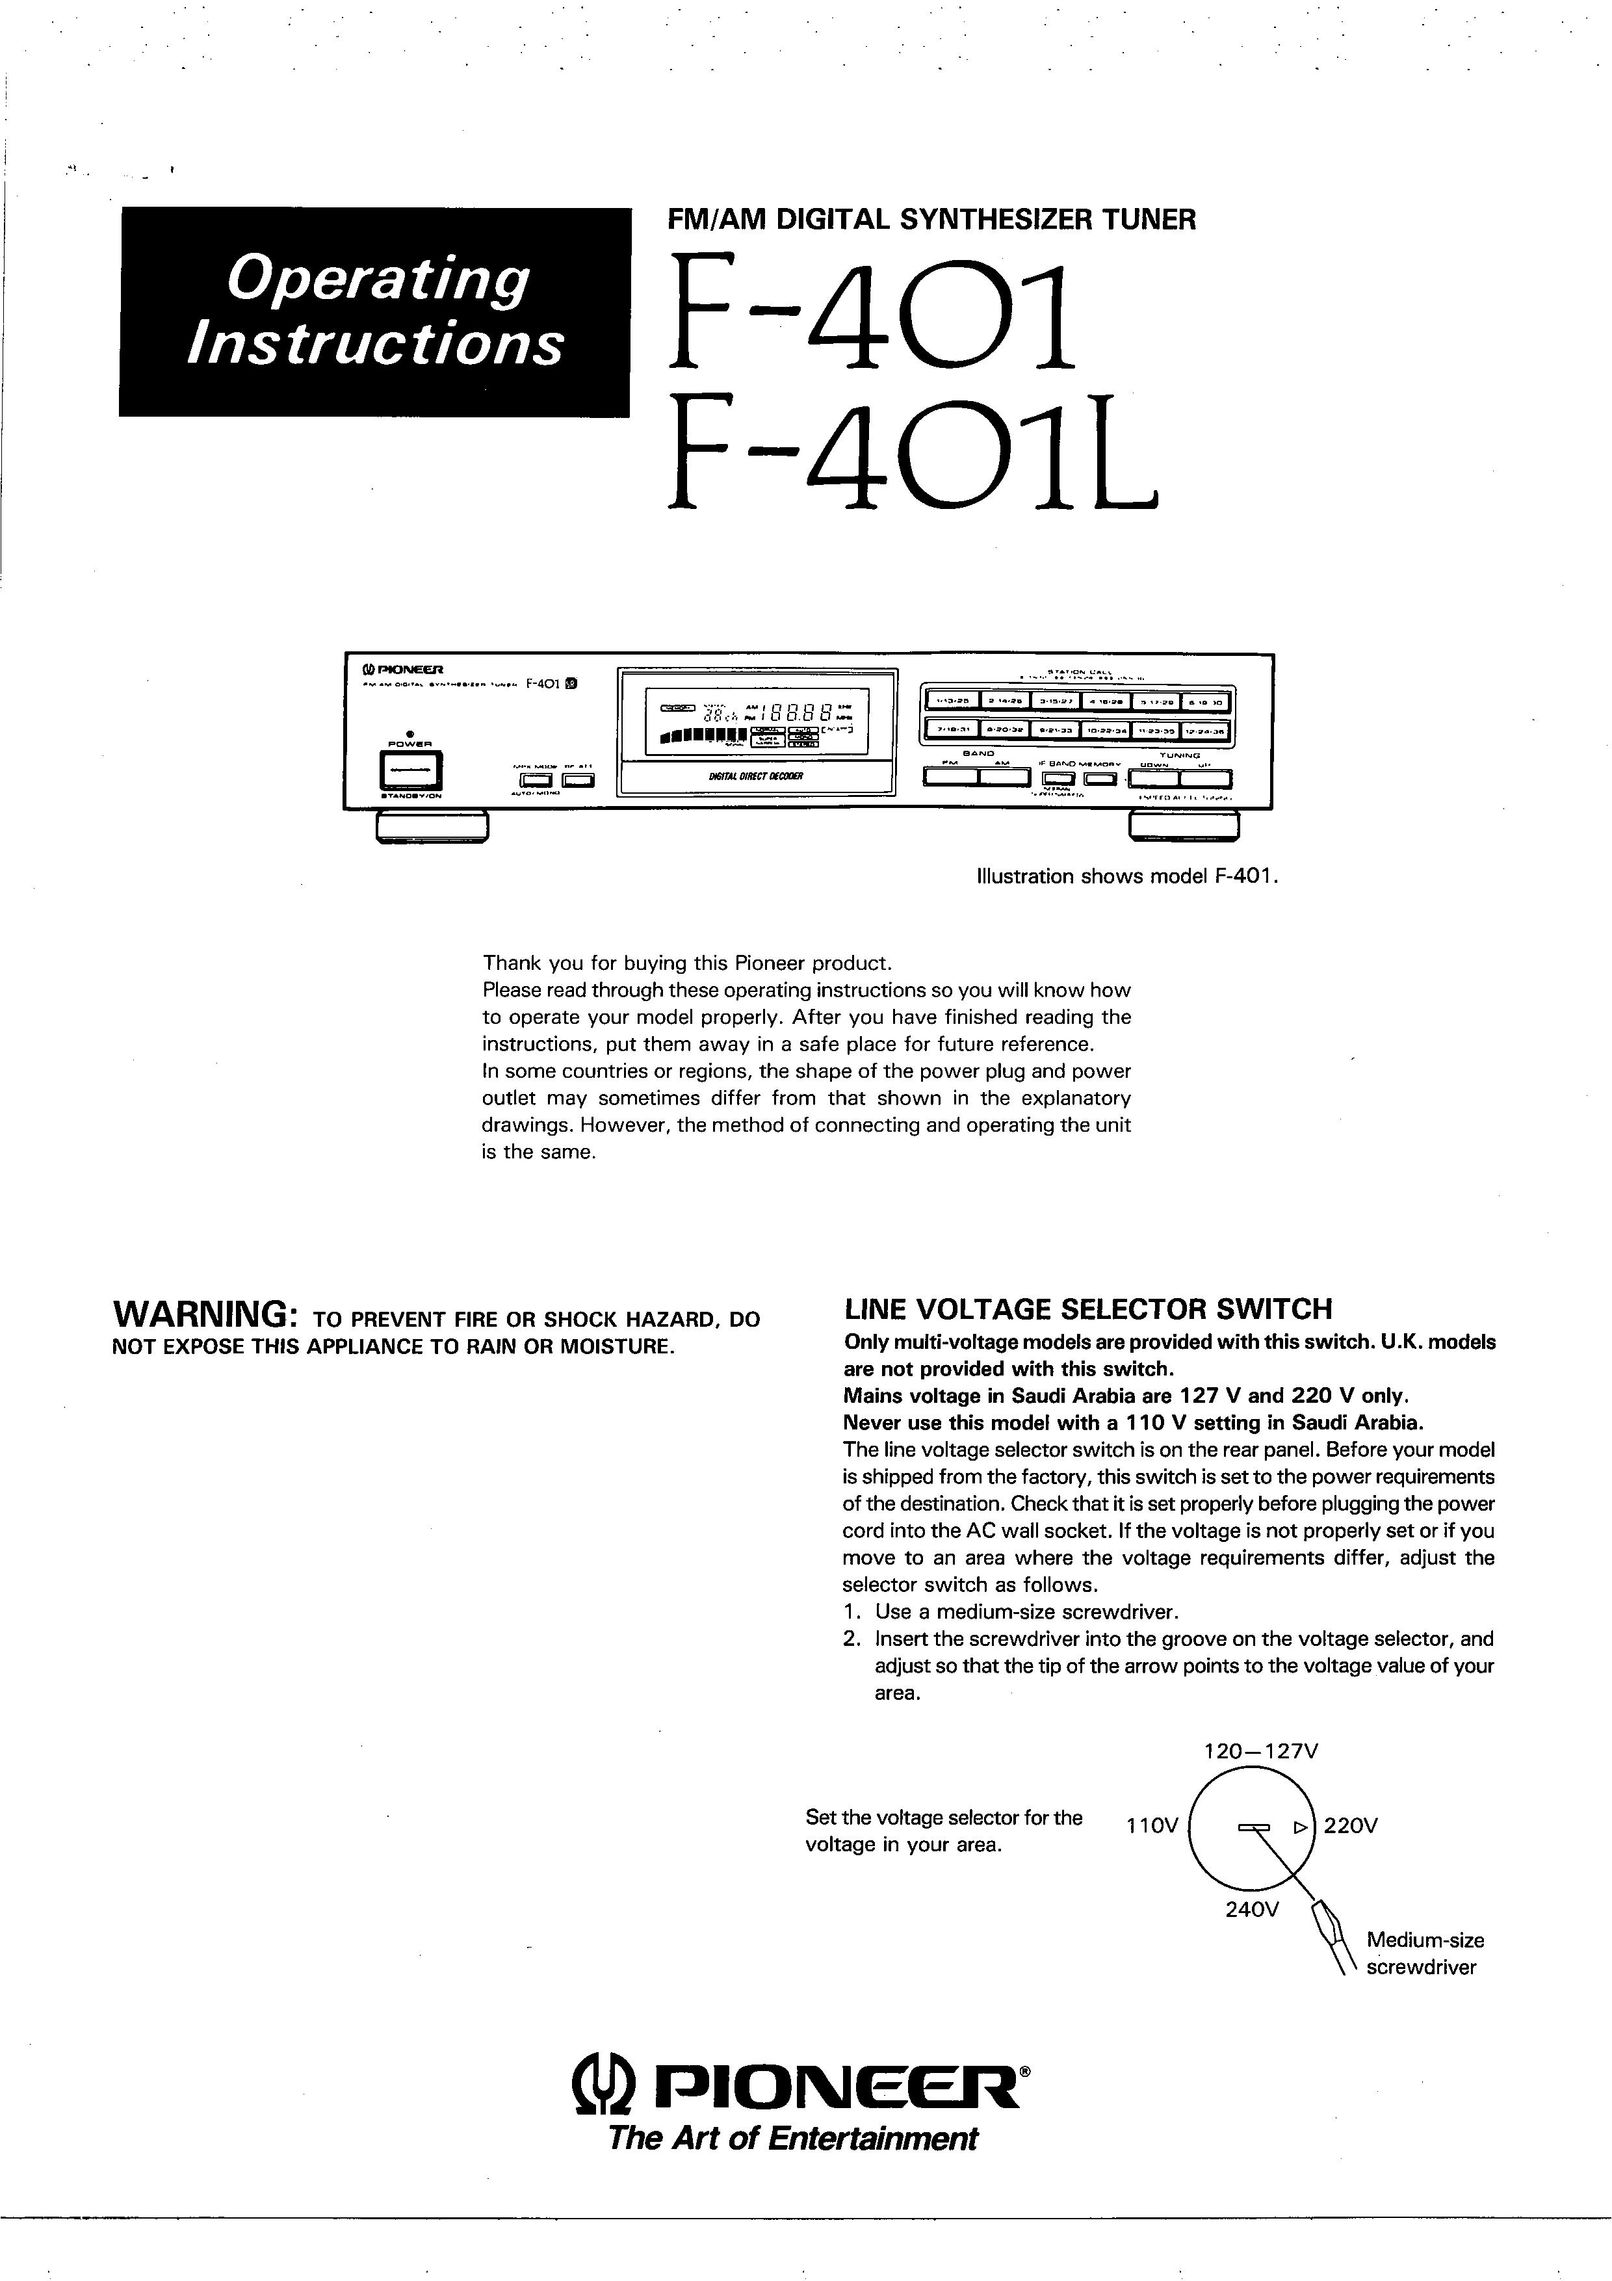 Pioneer F-401-L TV Receiver User Manual